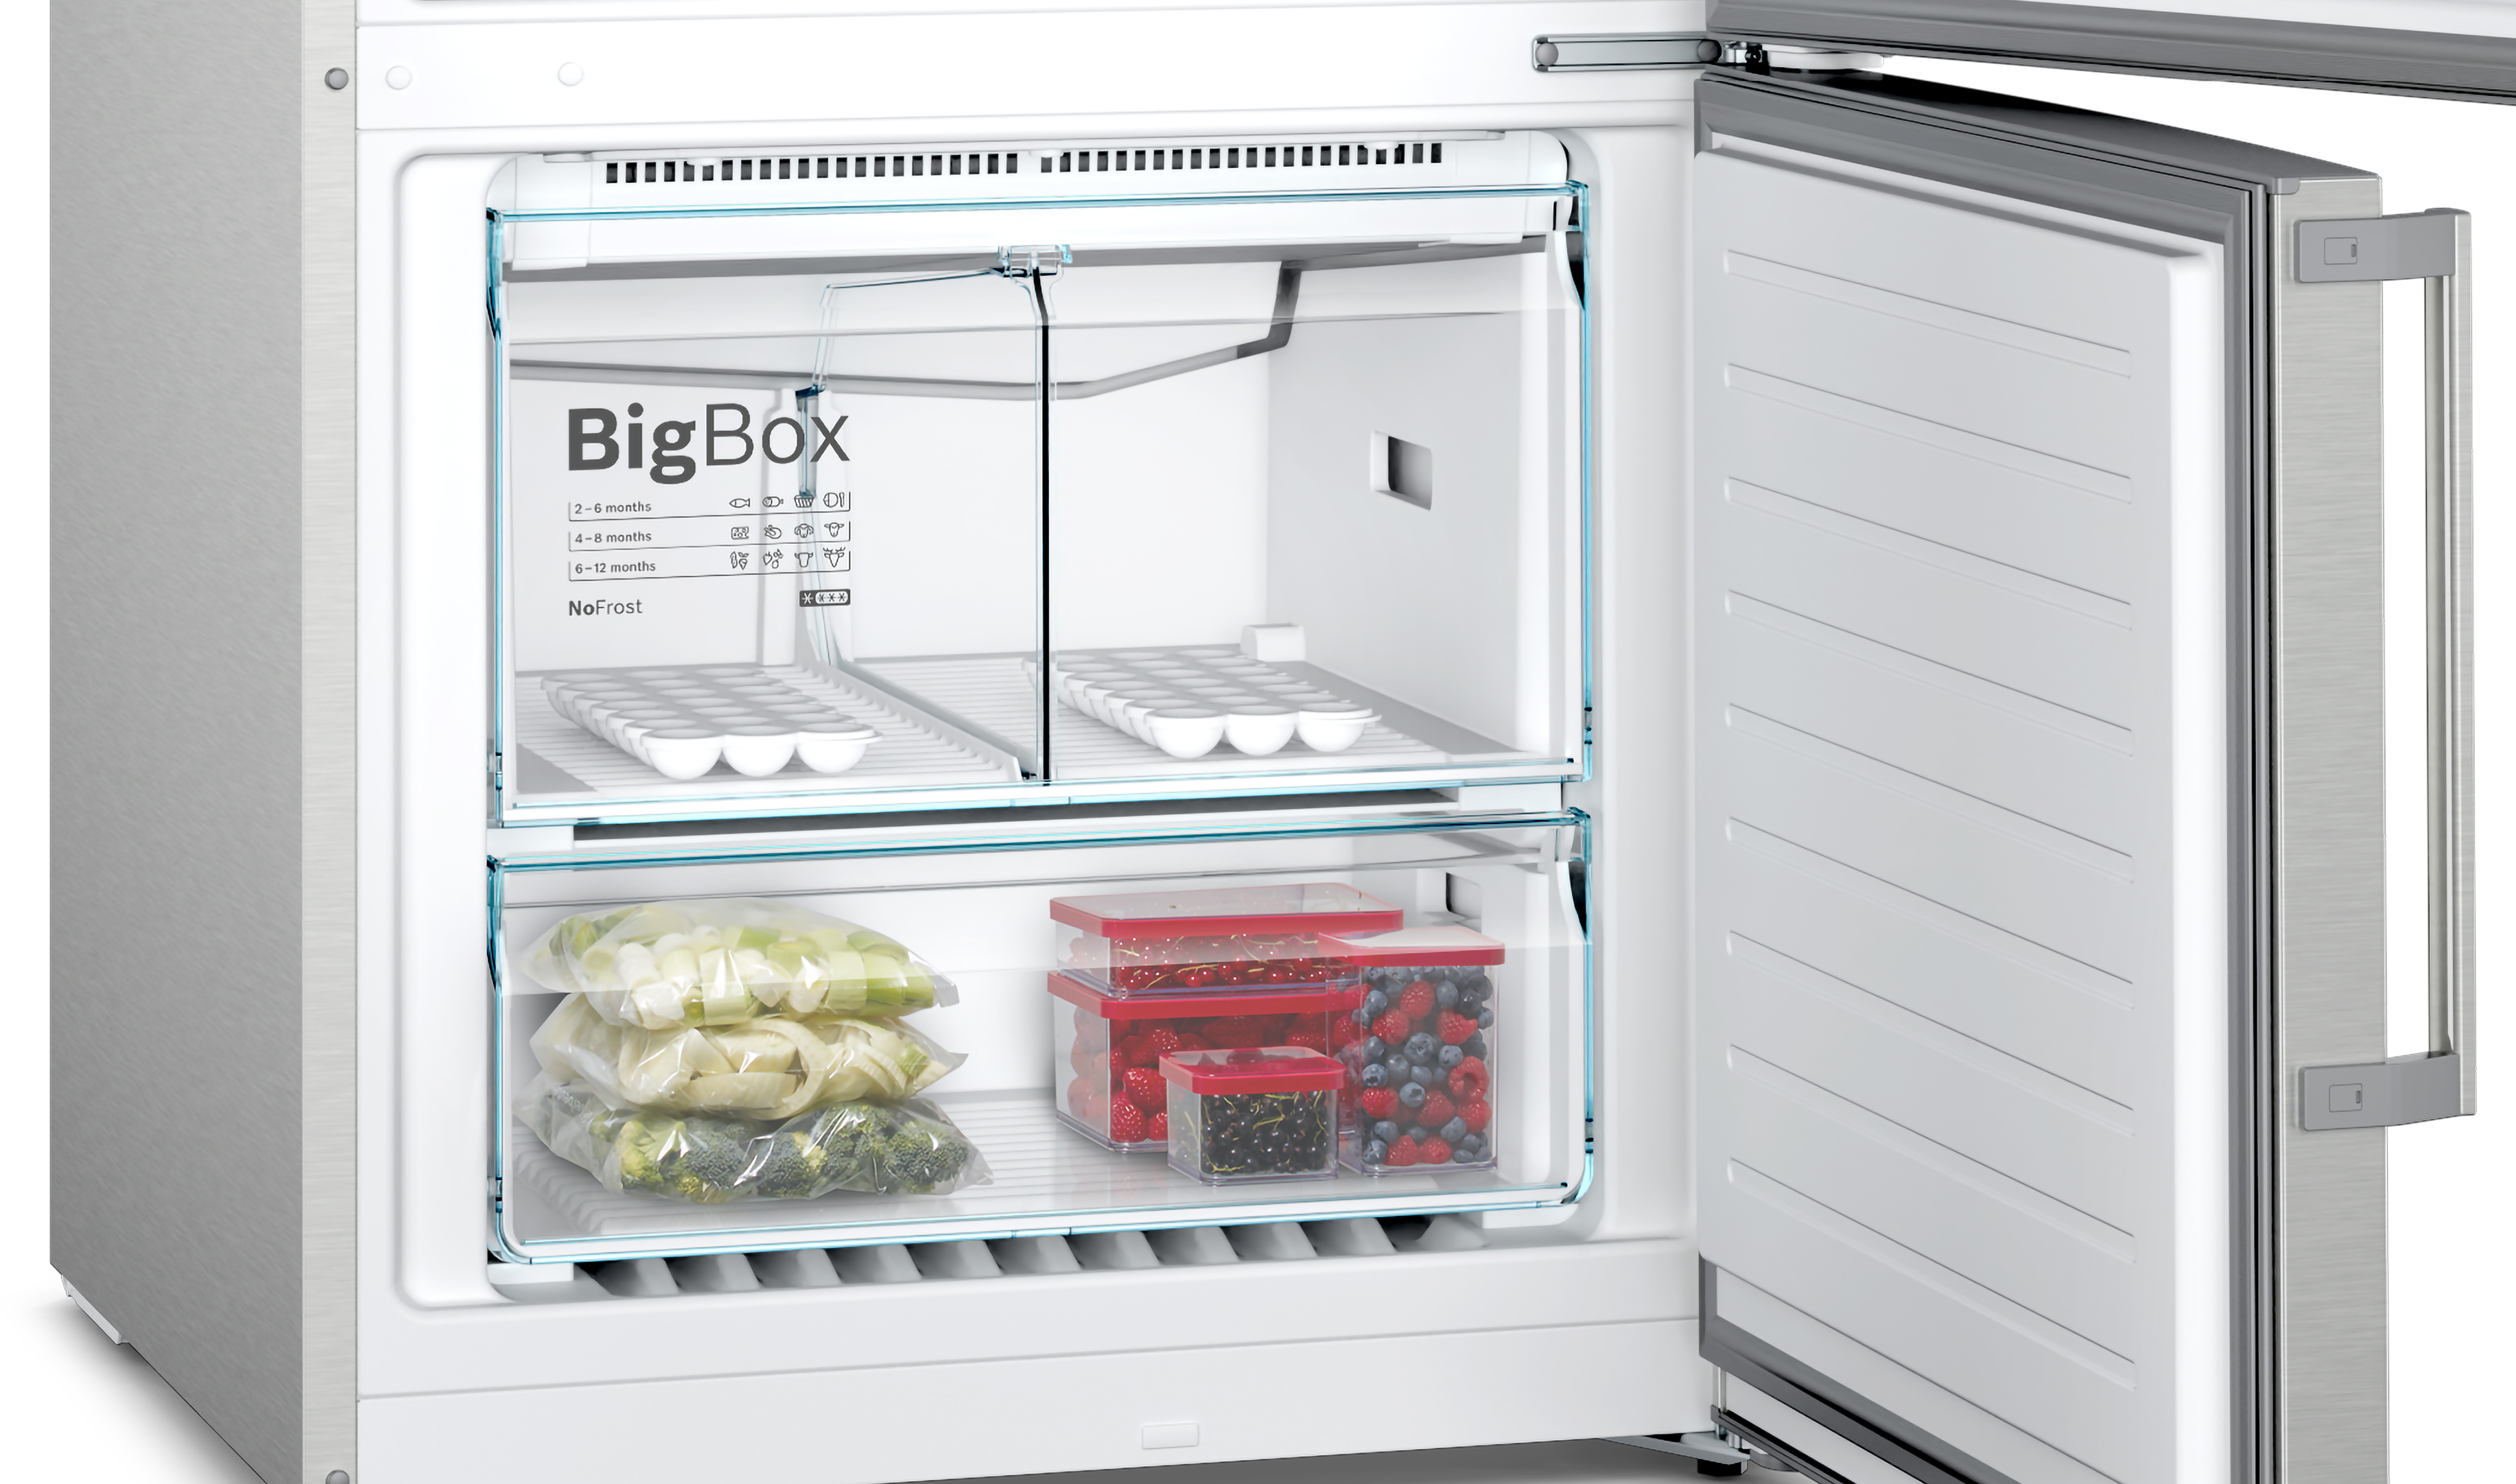 Refrigerador Bosch Combi No Frost Digital 1.93 x 0.70 x 0.80 554 Litros de  Acero